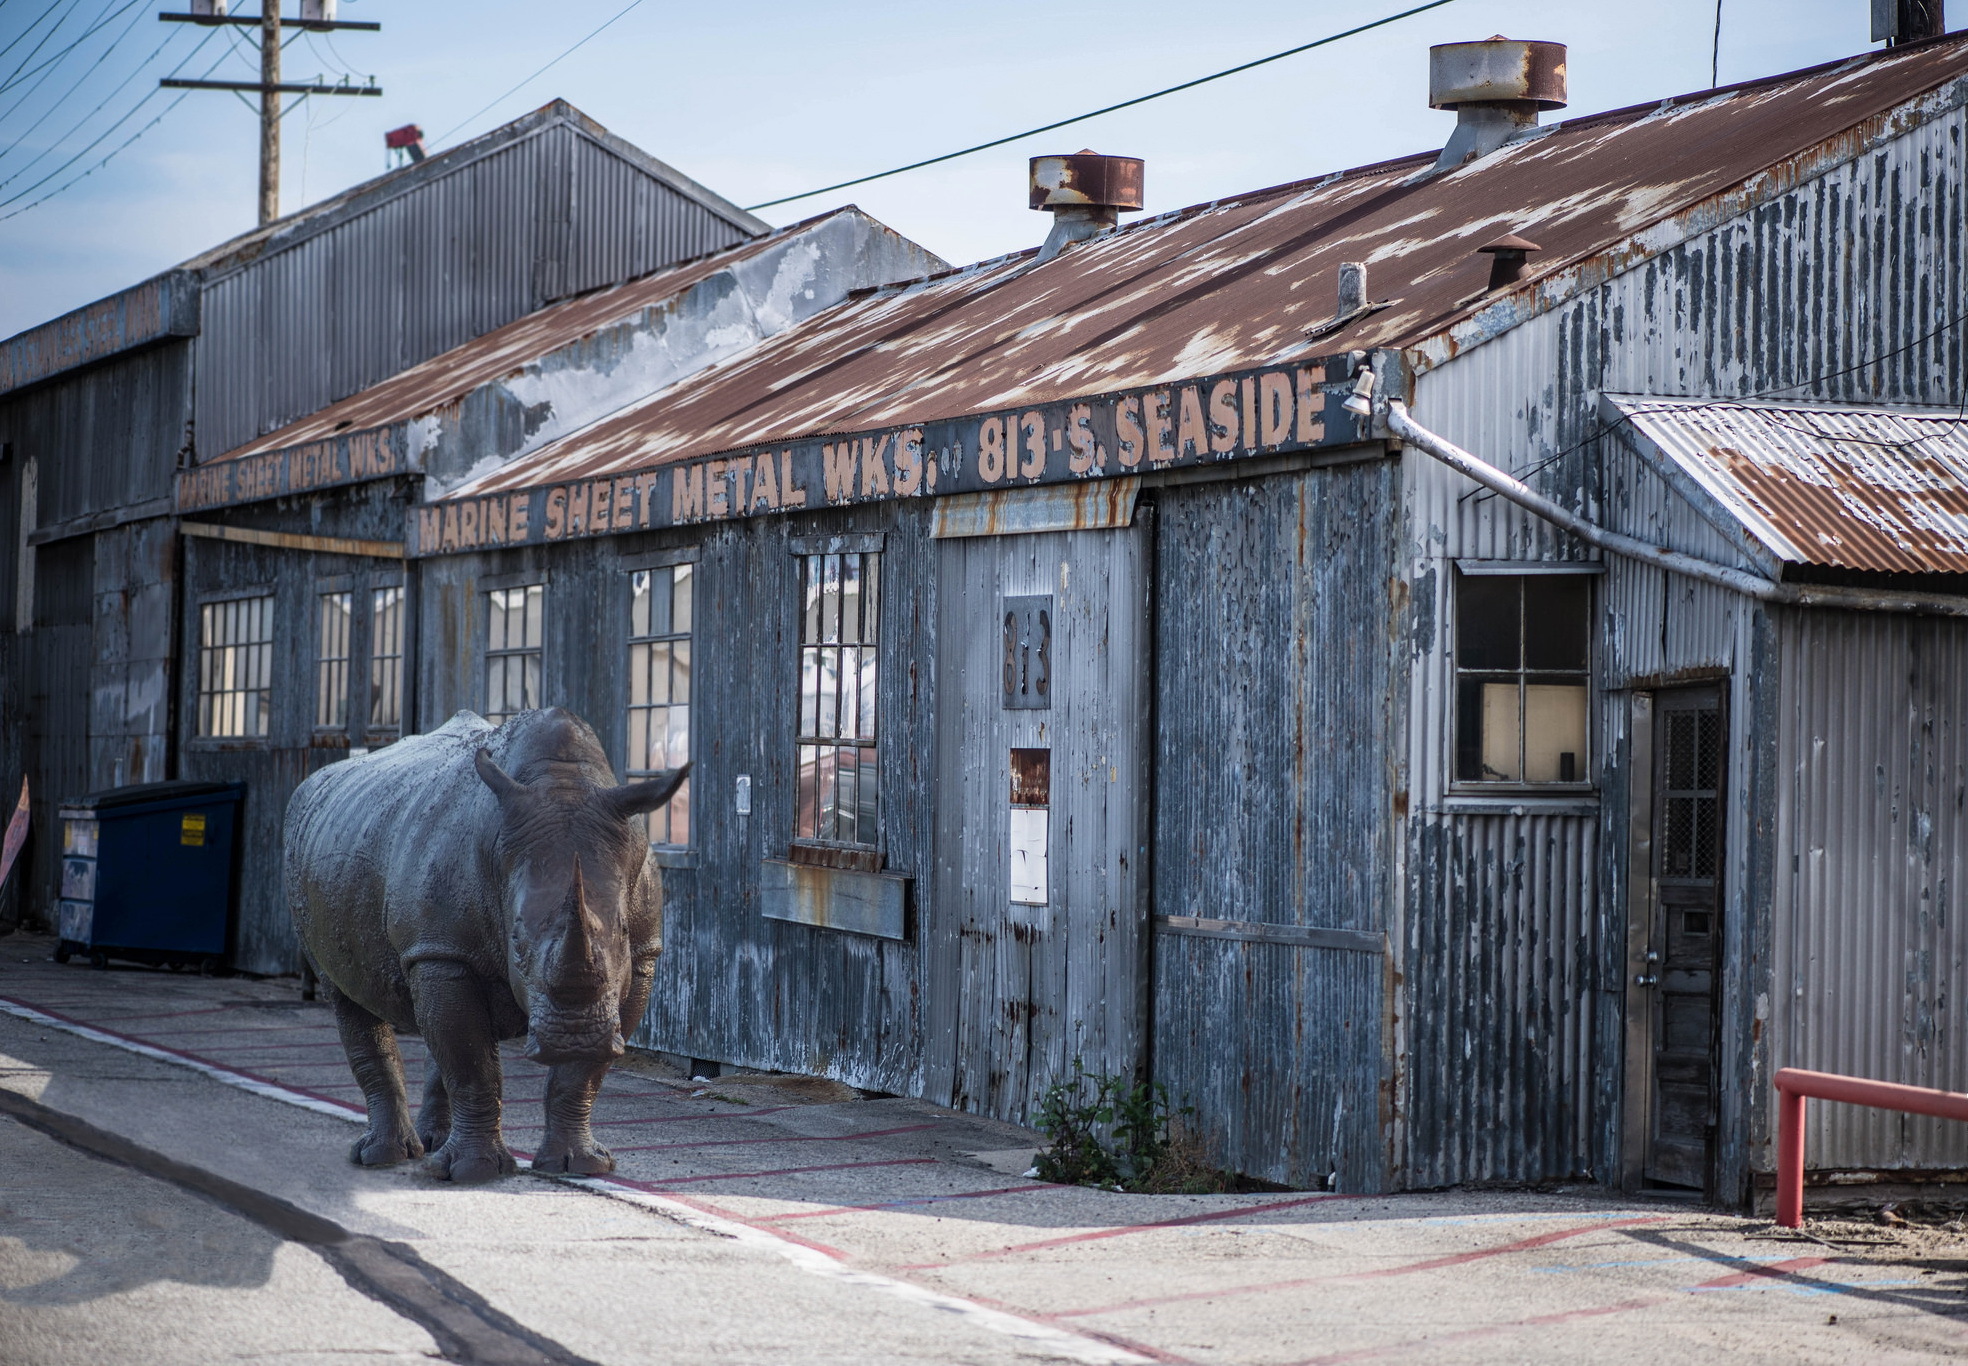 General 1968x1366 rhino animals street rust sidewalks pavements workshop workshops factories metal